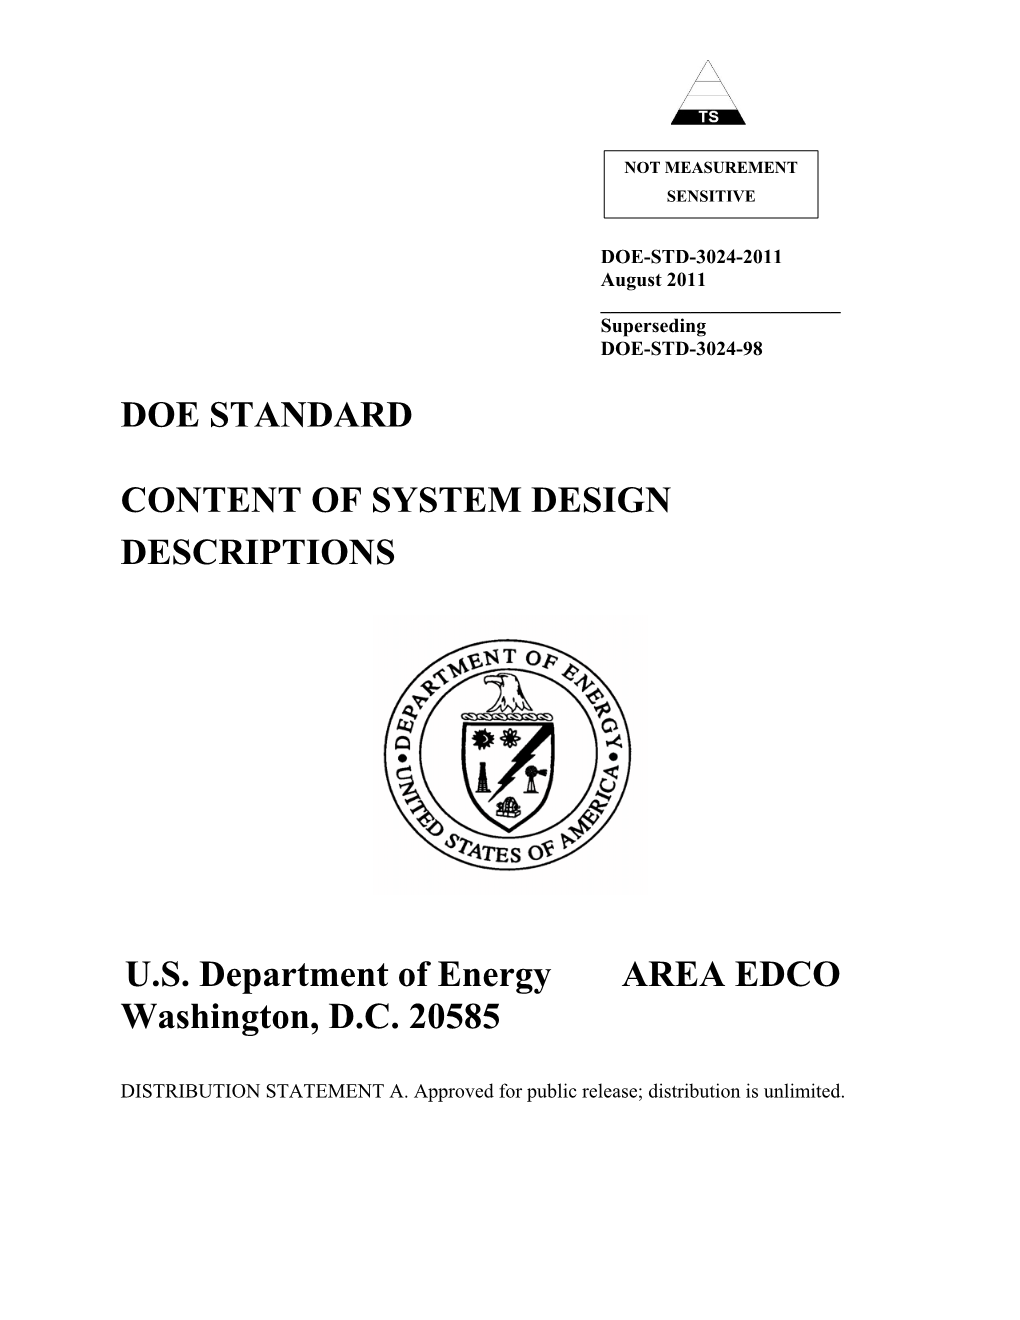 Content of System Design Descriptions